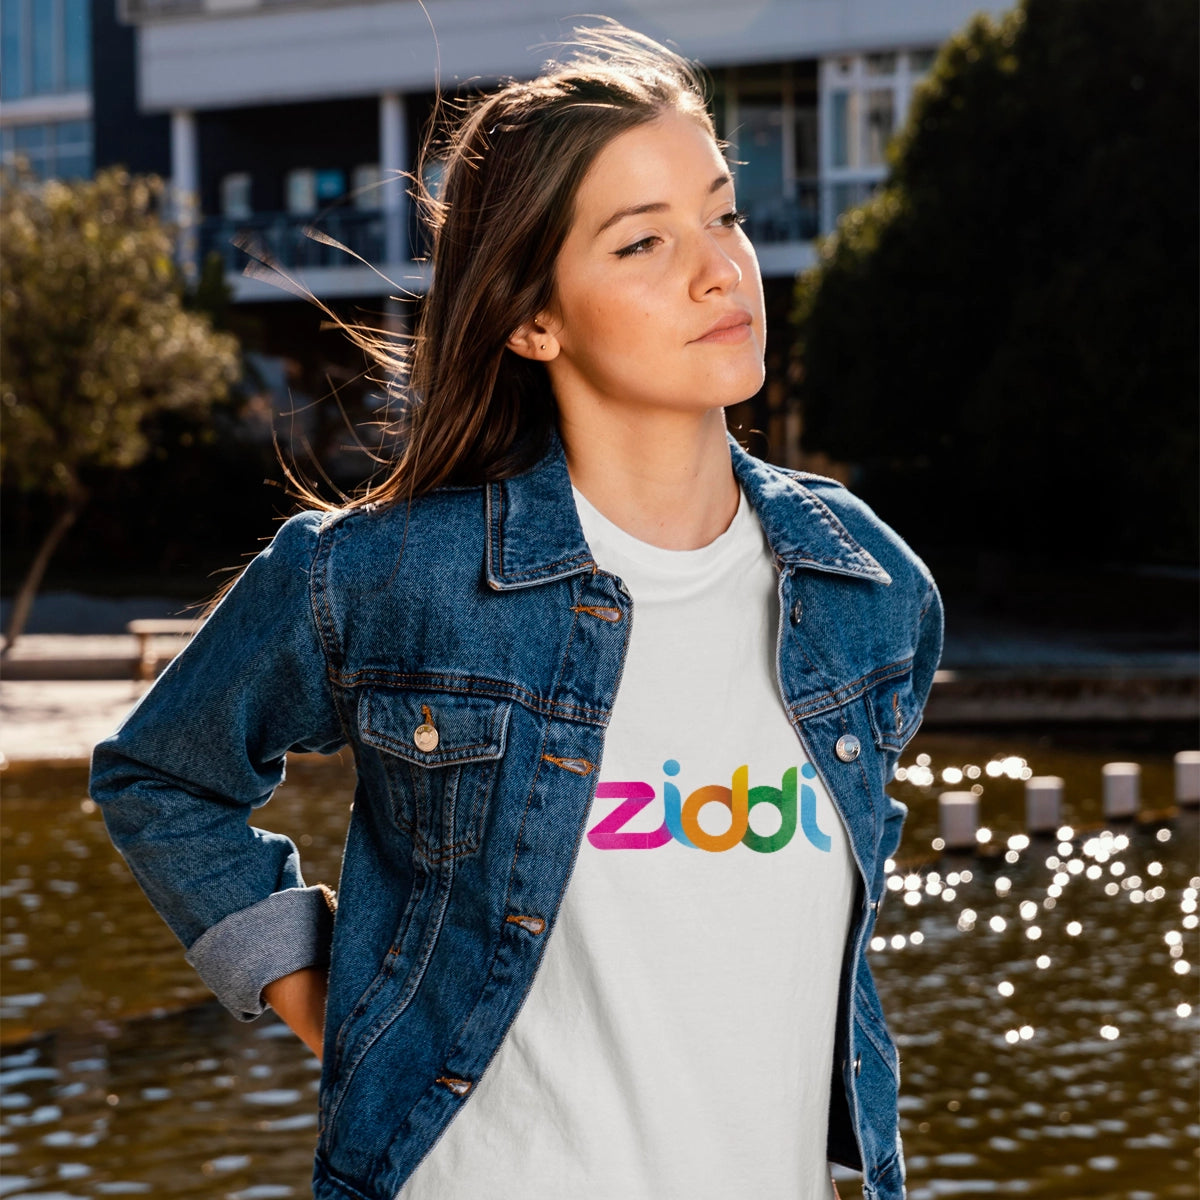 ziddi.org